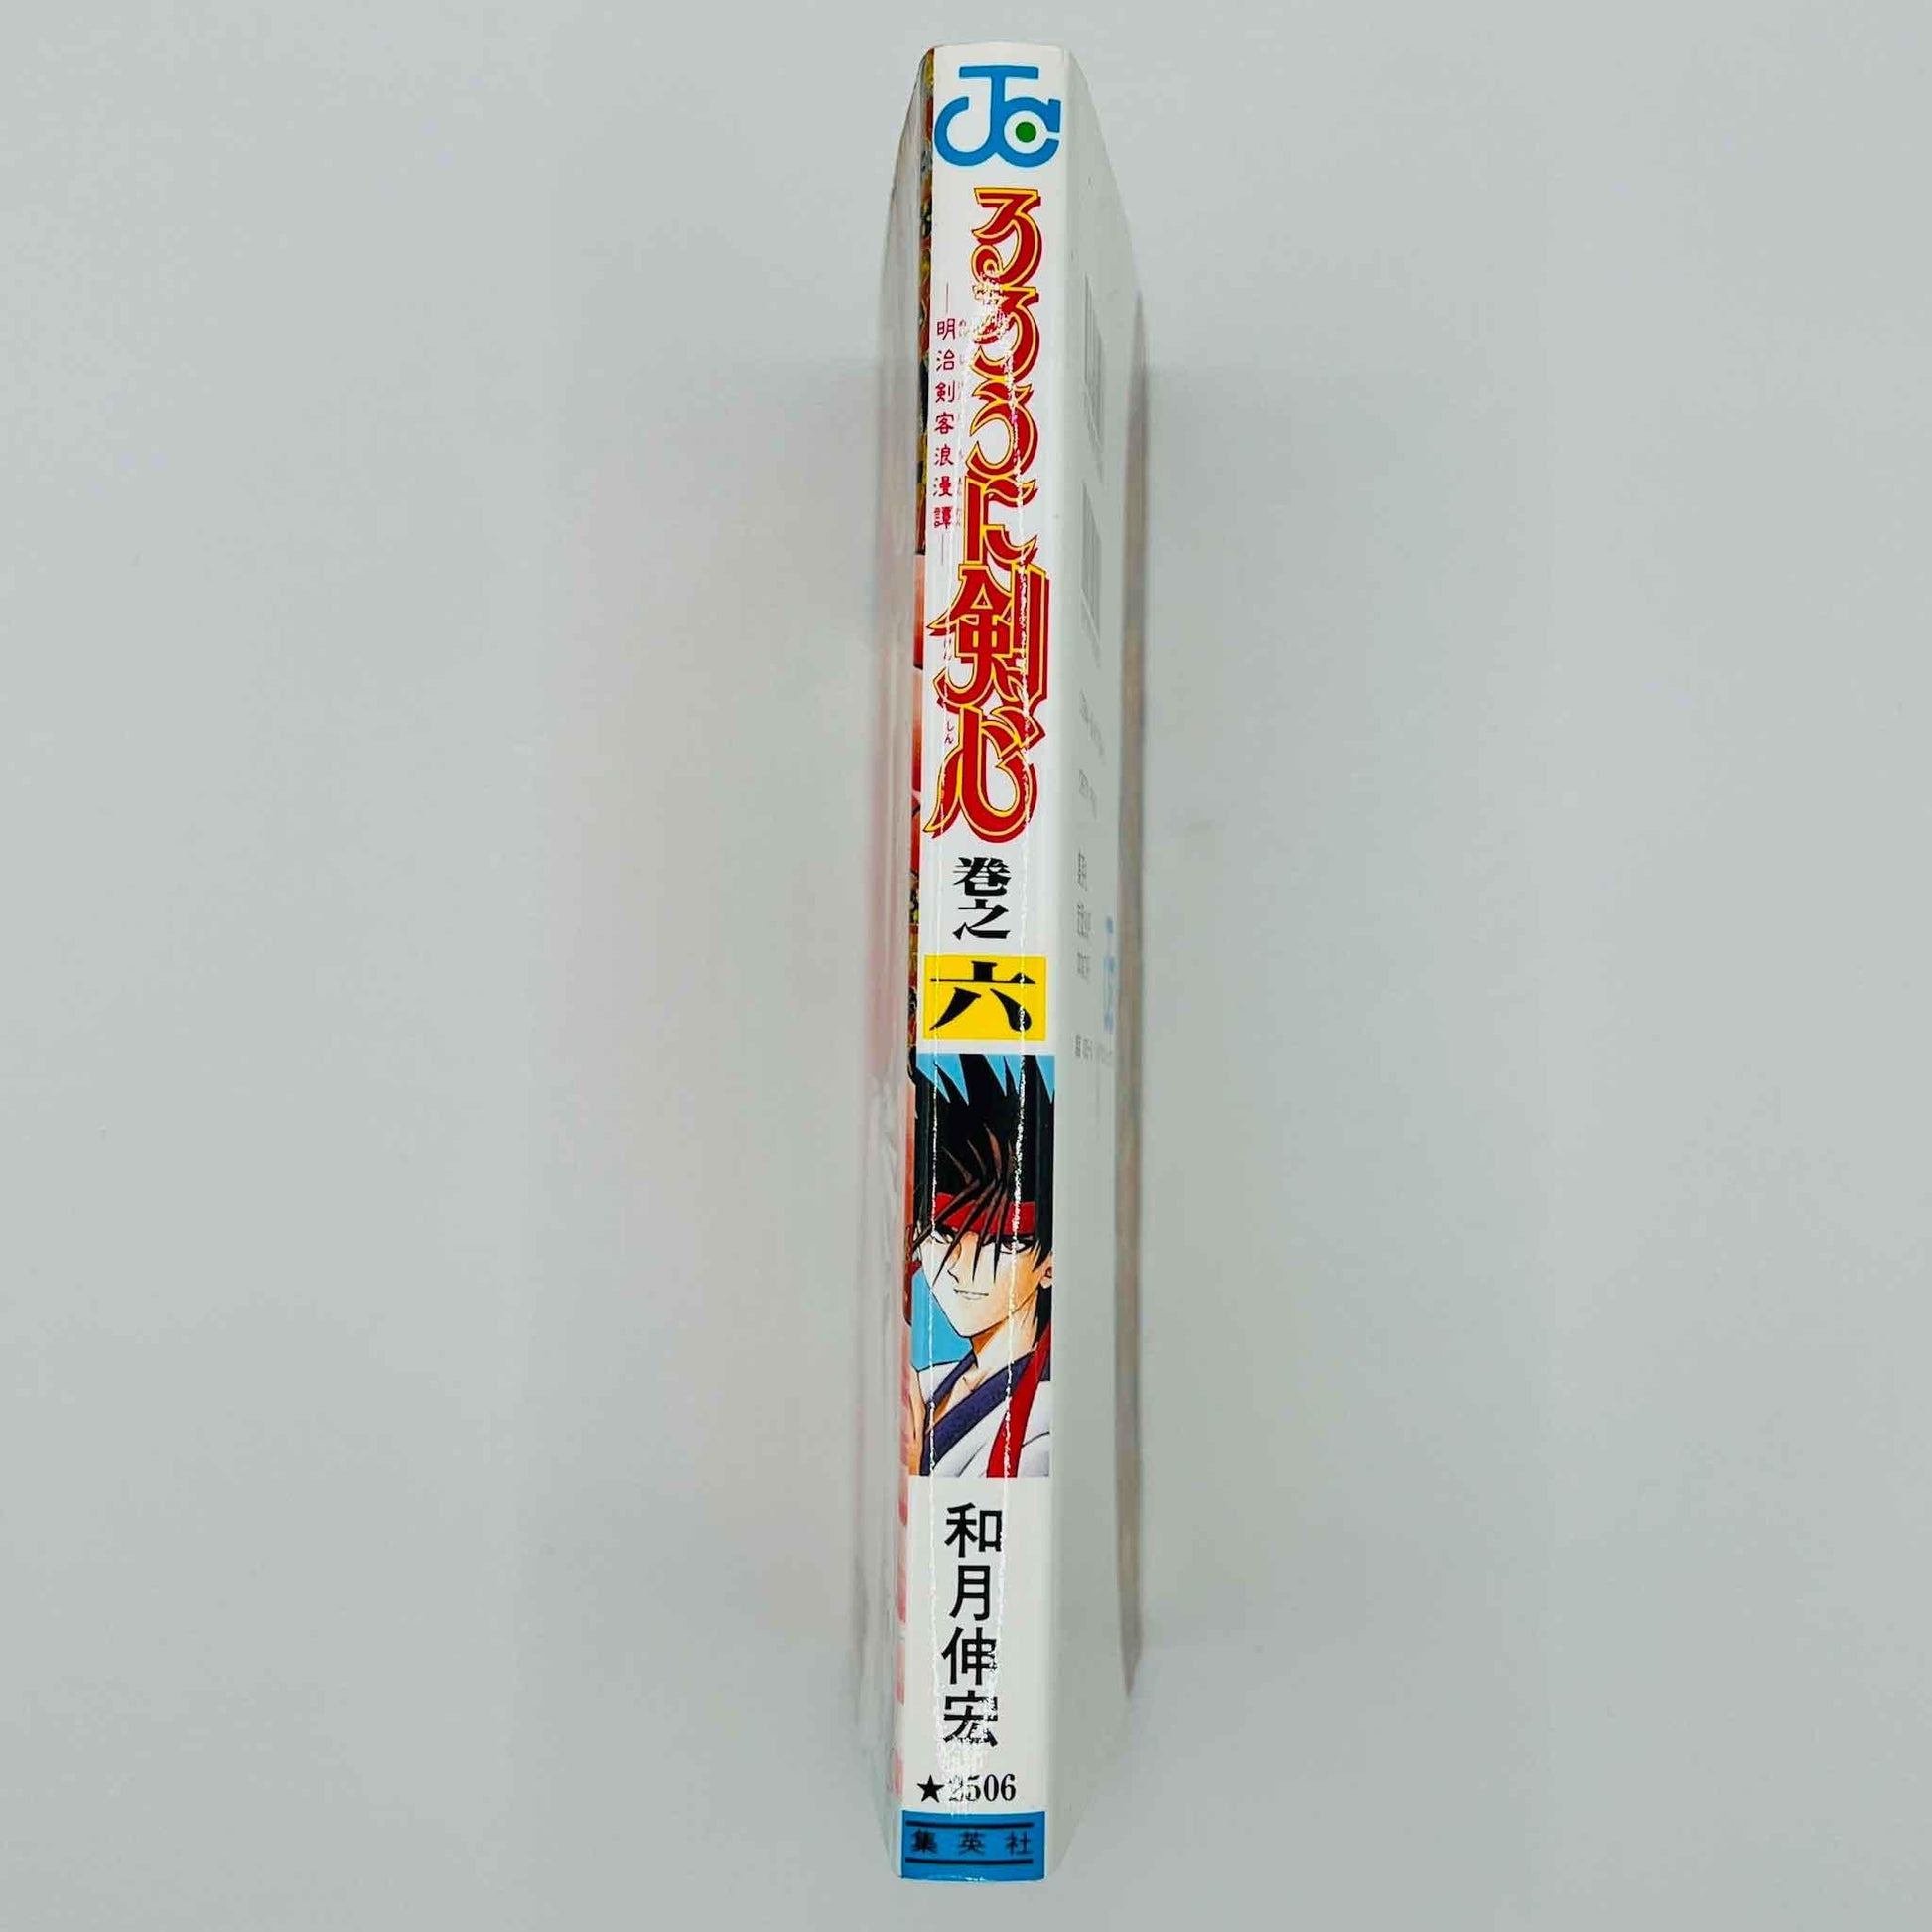 Rurouni Kenshin - Volume 06 - 1stPrint.net - 1st First Print Edition Manga Store - M-KENSH-06-001